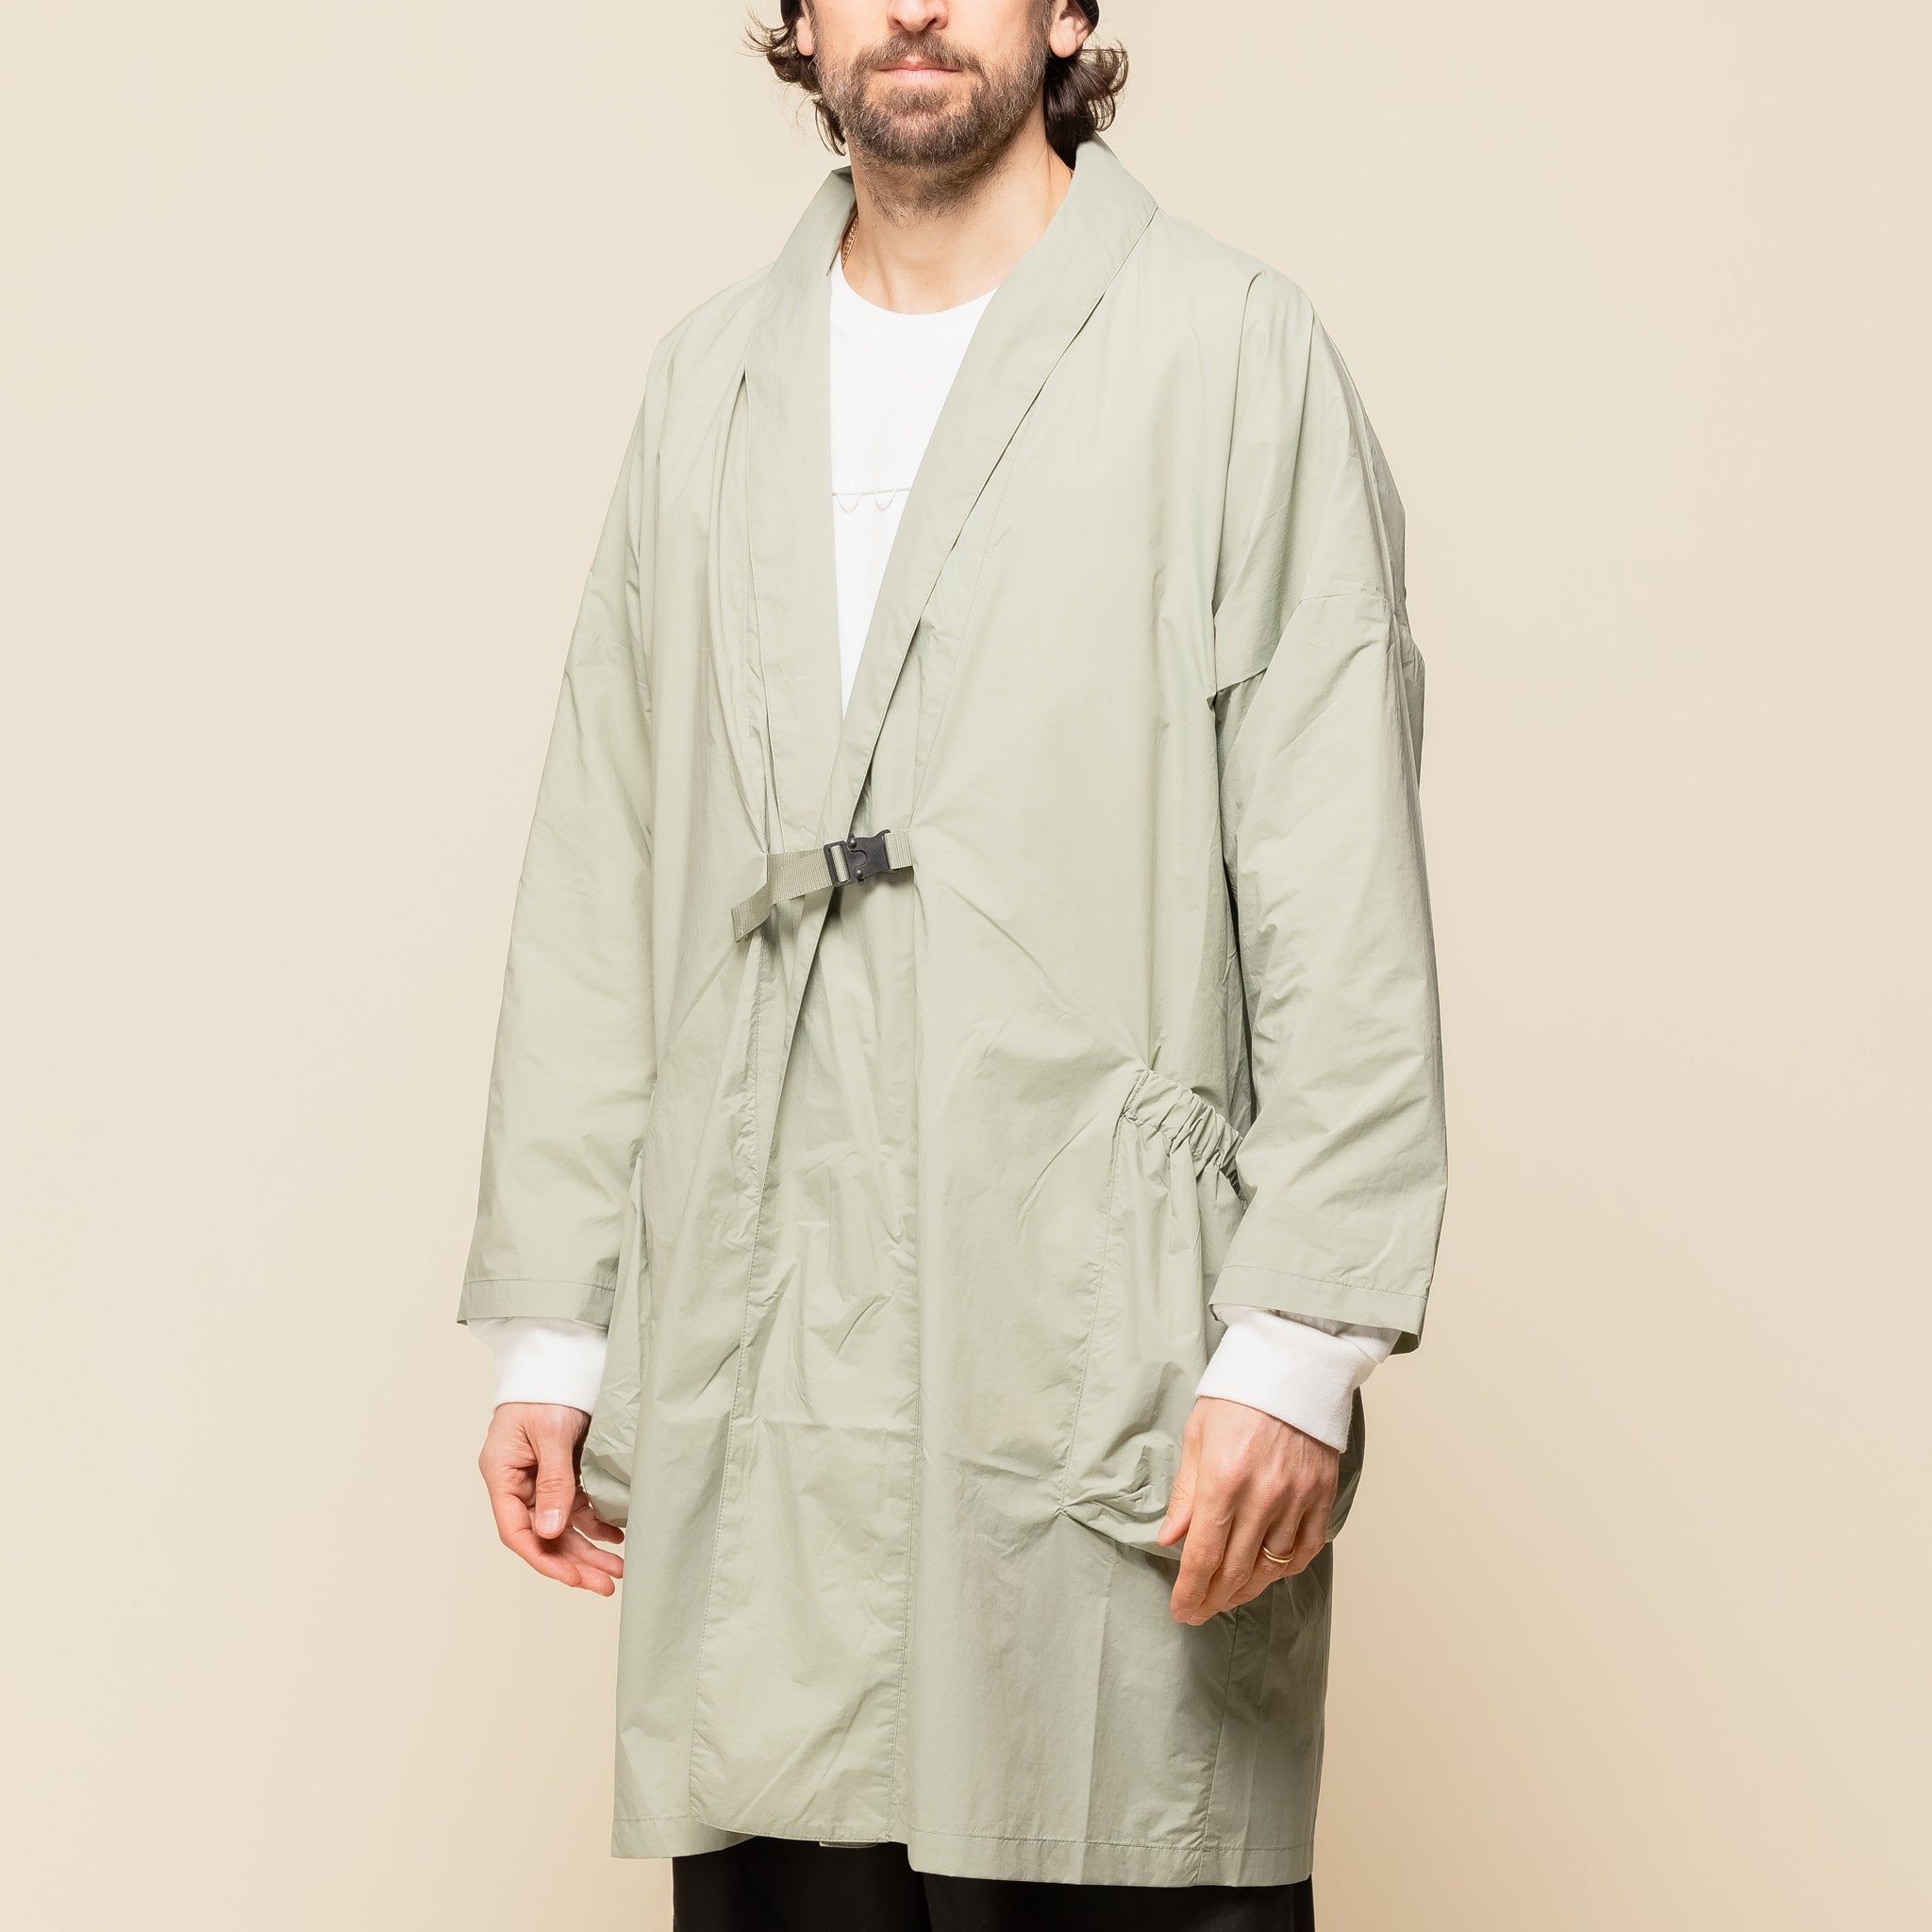 CMF Comfy Outdoor Garment - Haori Coat - Light Khaki